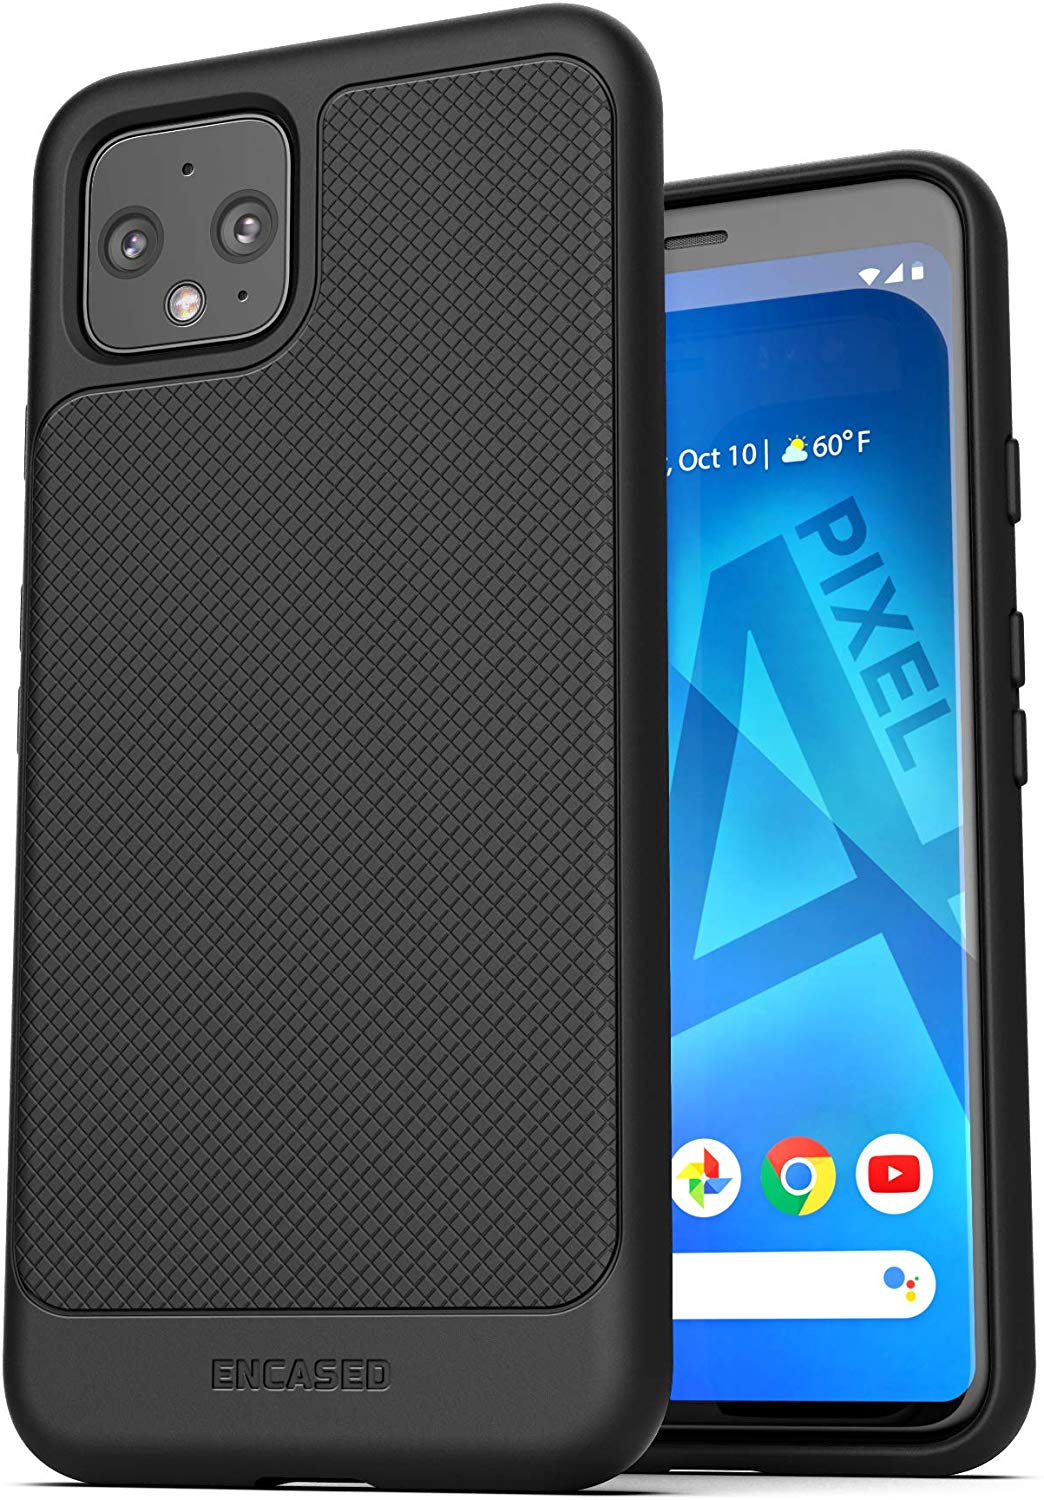 Encased Pixel 4 Case (Thin Armor) Slim Fit Flexible Grip Phone Cover for Google Pixel 4 - Black - image 1 of 6